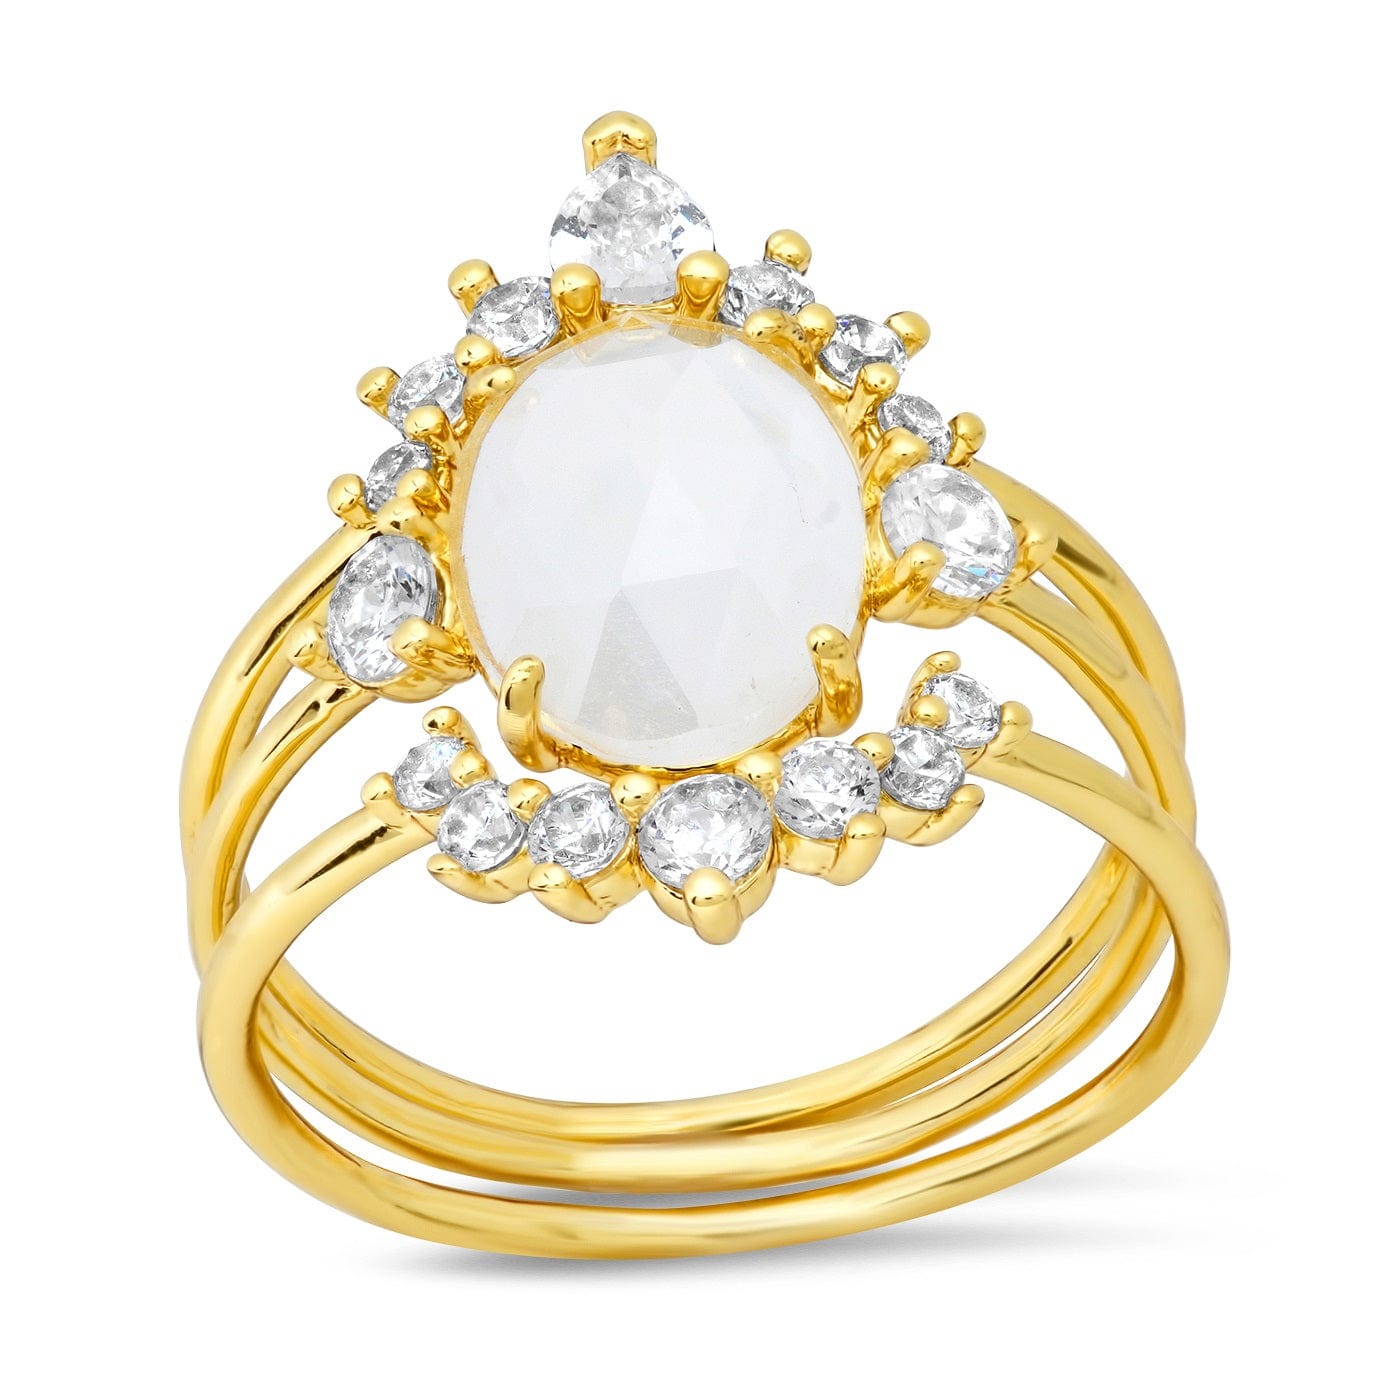 TAI JEWELRY Rings April / 6 Three Piece Vintage Inspired Birthstone Ring